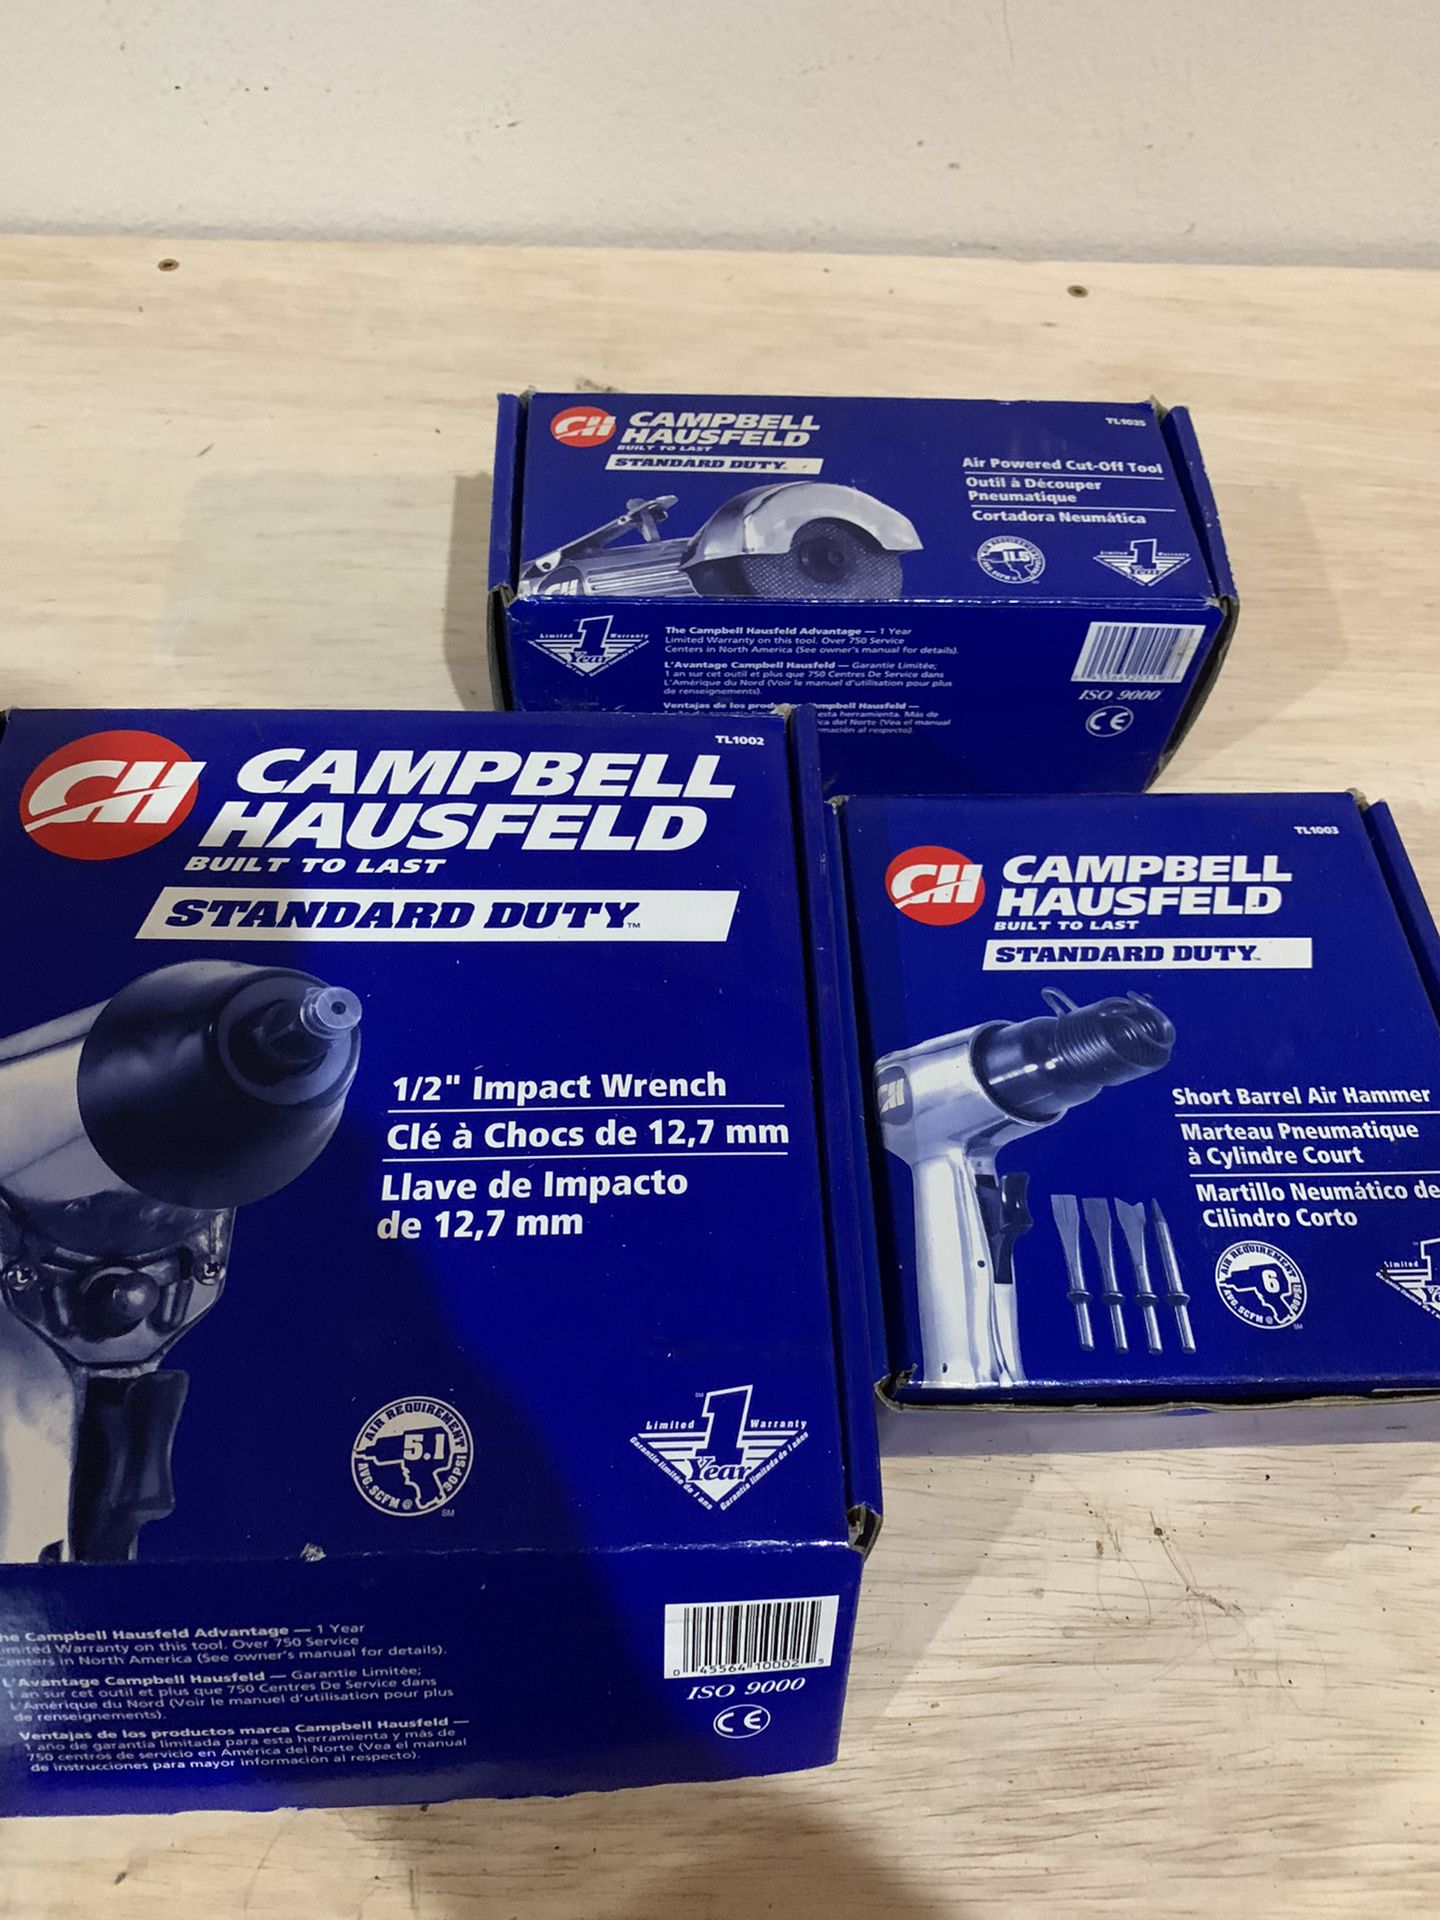 Campbell Hausfeld air powered tools